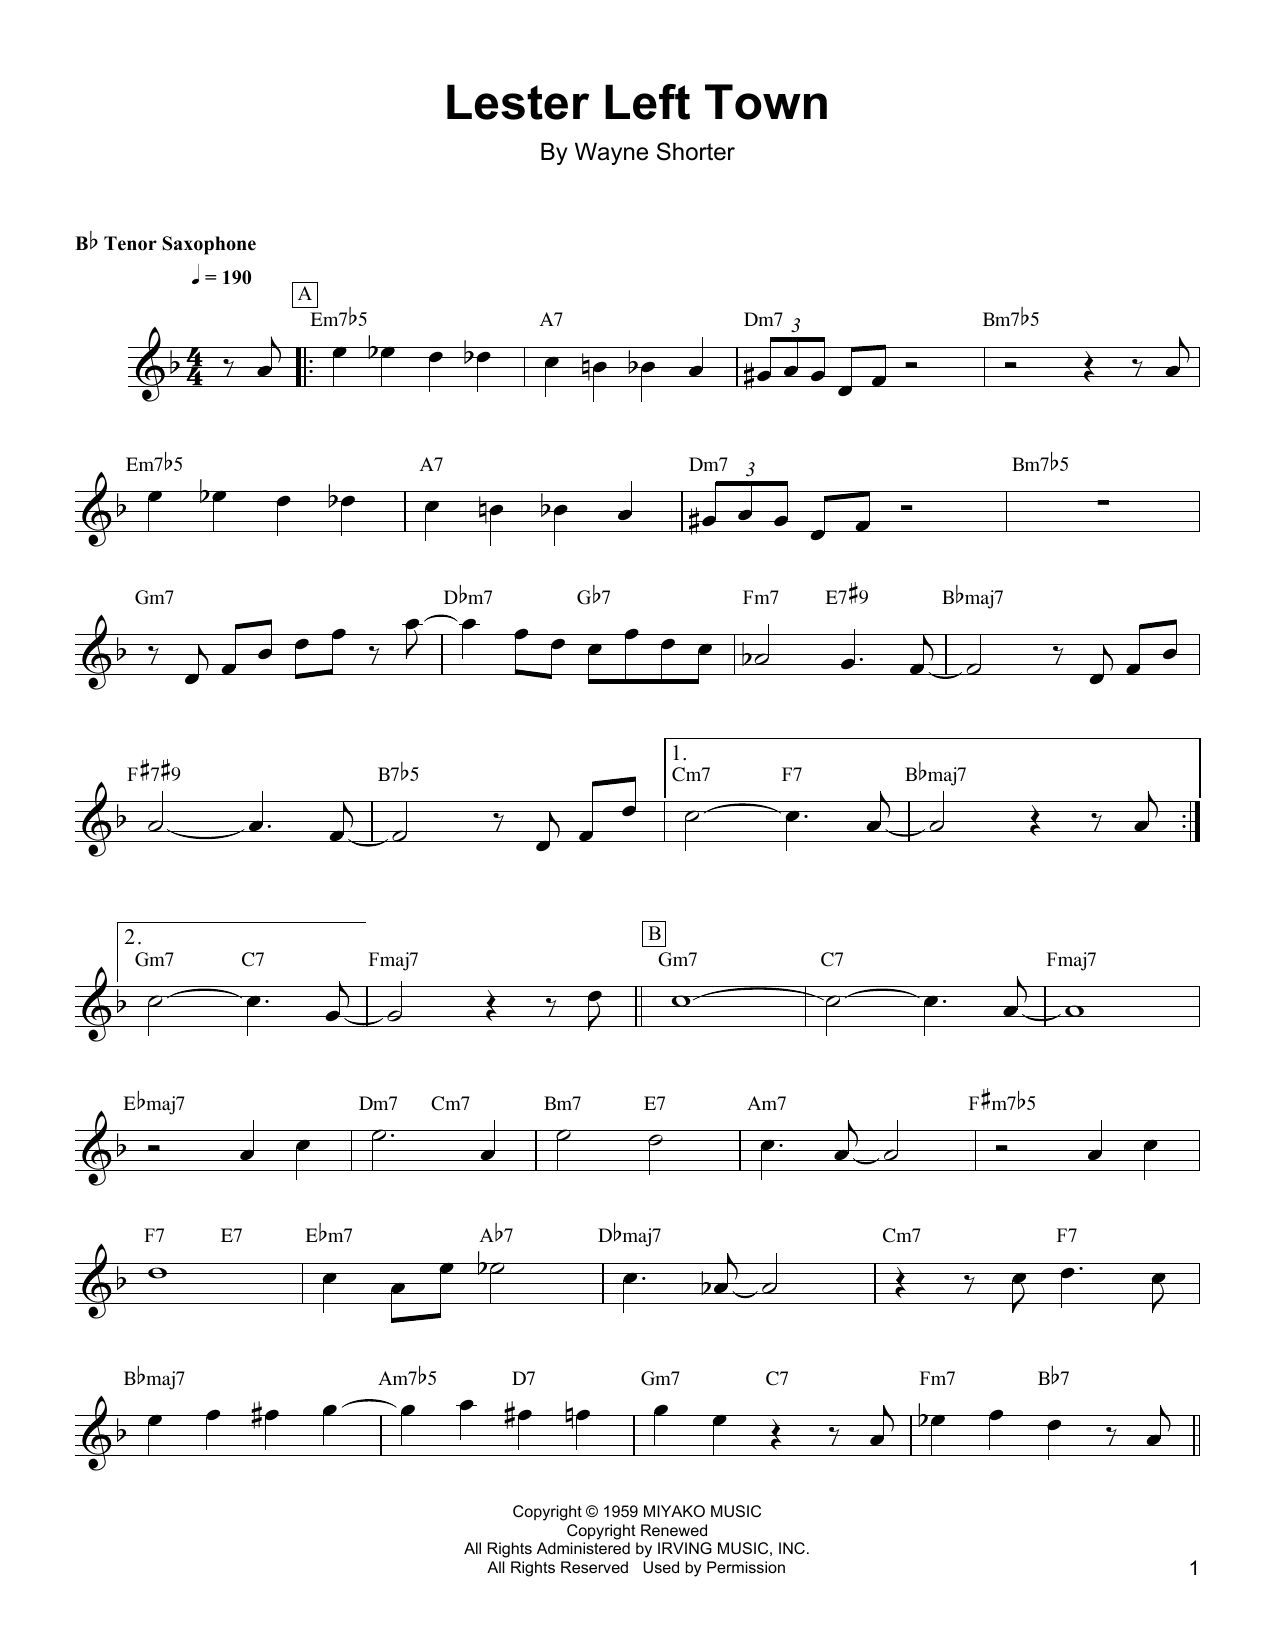 Wayne Shorter Lester Left Town Sheet Music Notes & Chords for Tenor Sax Transcription - Download or Print PDF